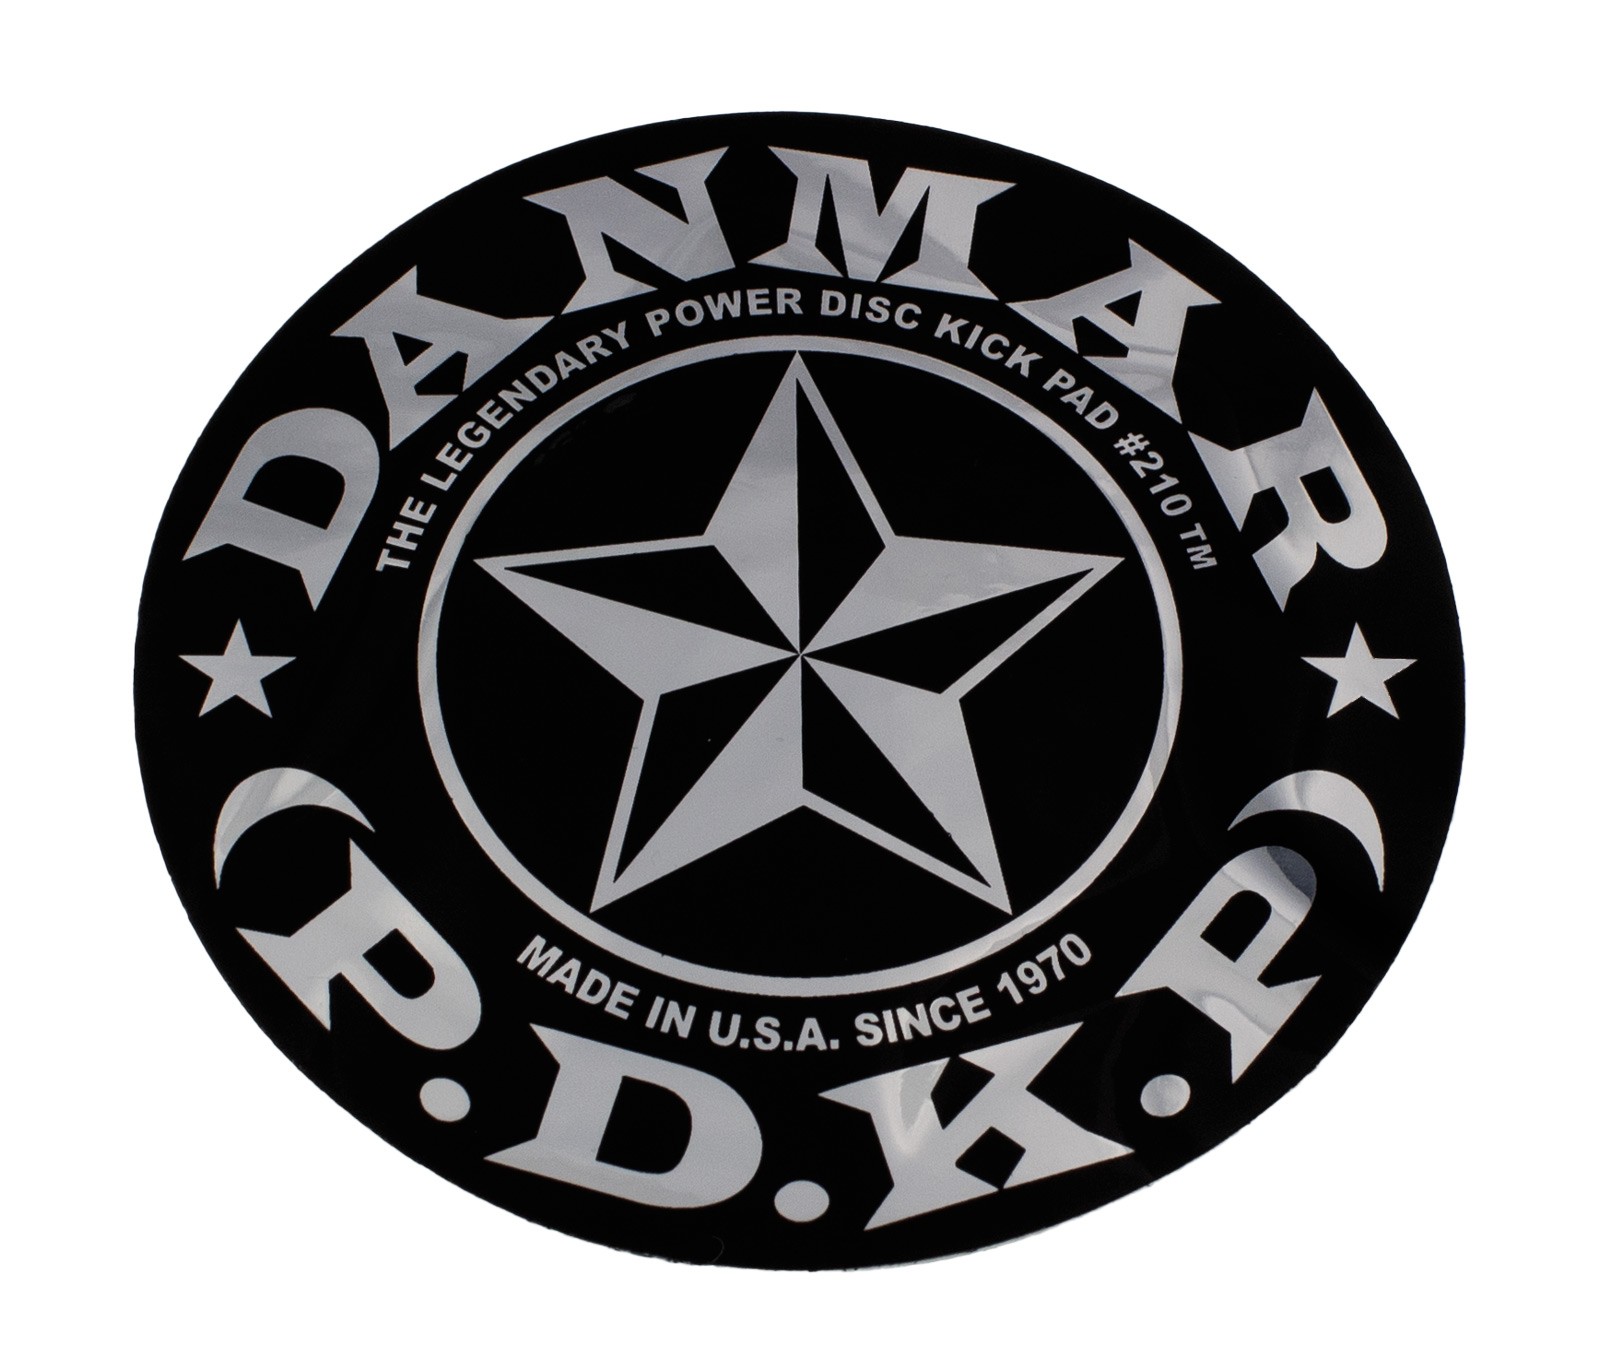 DANMAR 210STR - BD POWER DISK KICK PAD - STAR